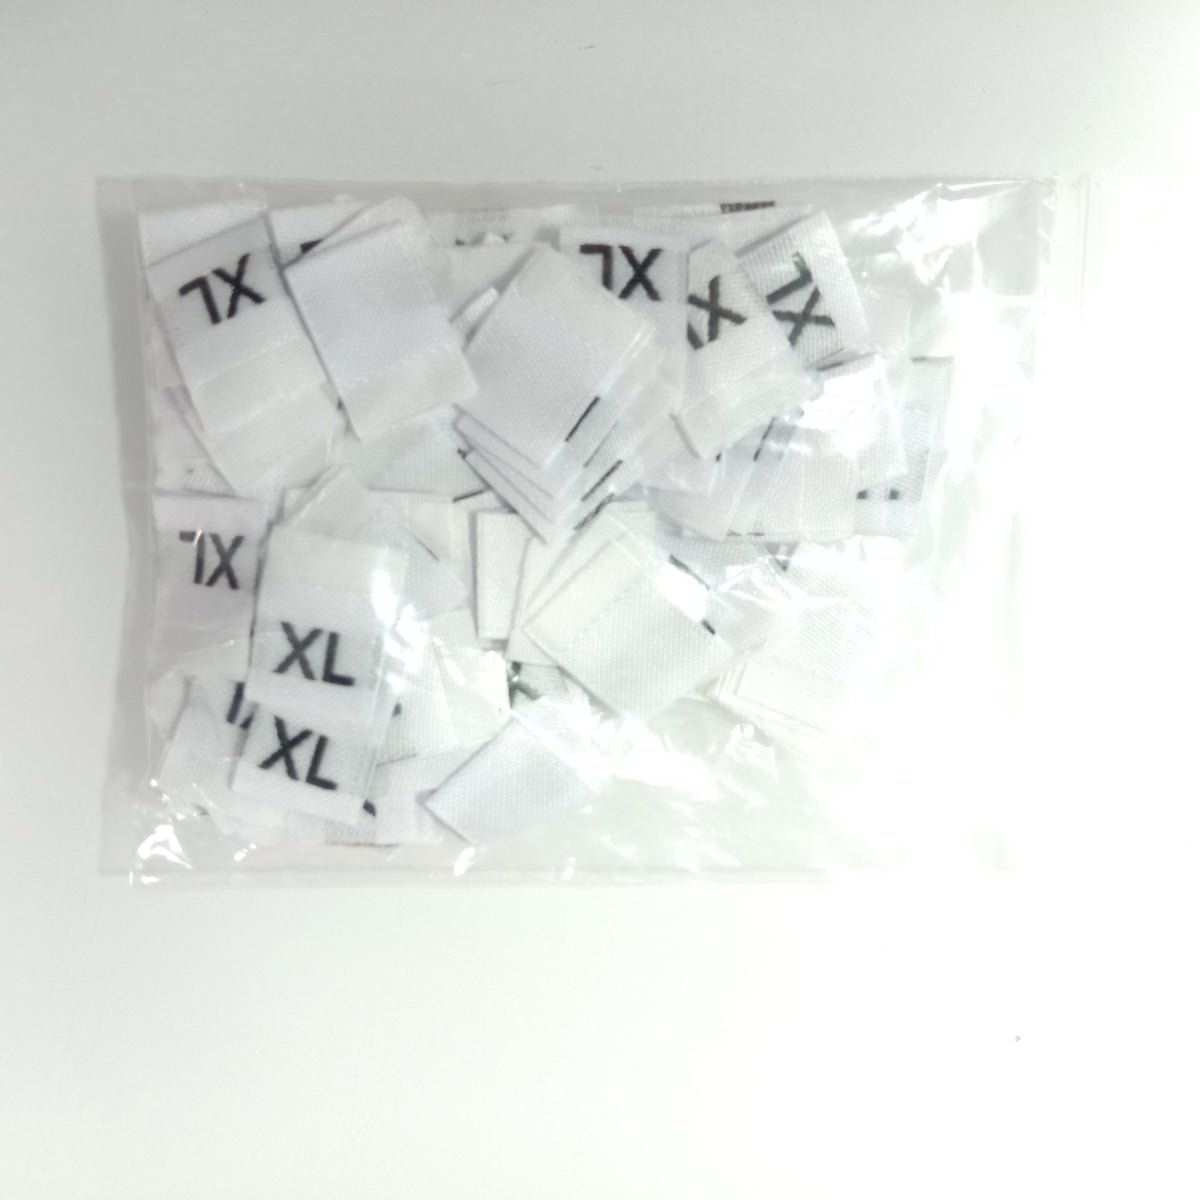 10-100pcs Clothing Size Label Tags XS S M L XL 2XL 3XL 4XL Black Text White Garment Clothes T Shirt Dress Fabric - S white - - Asia Sell